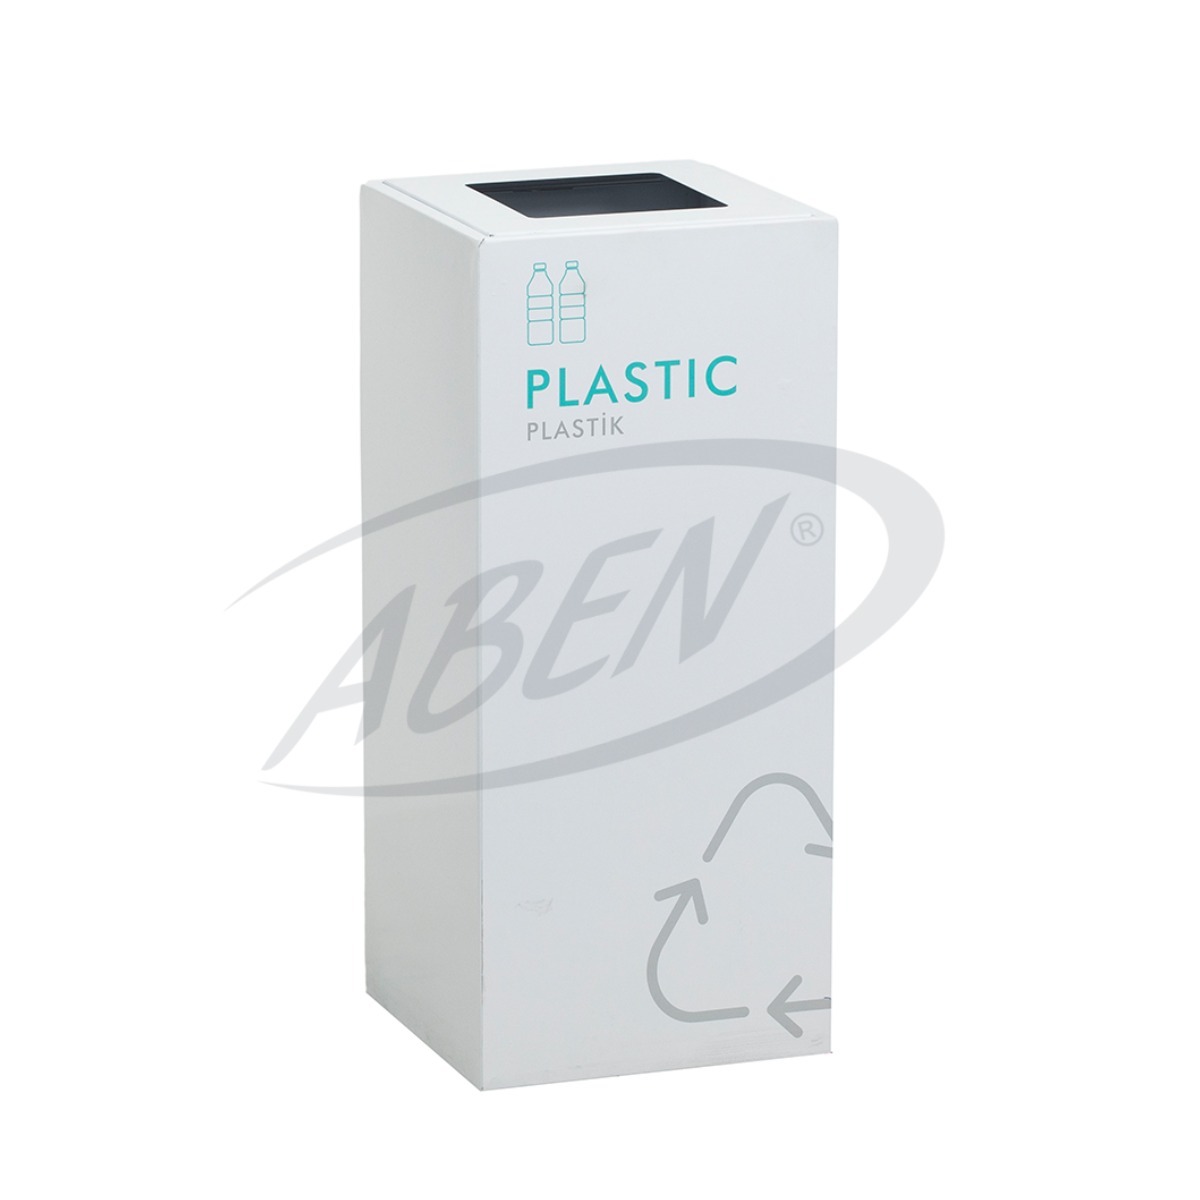 AB-797 Recycle Bin product logo